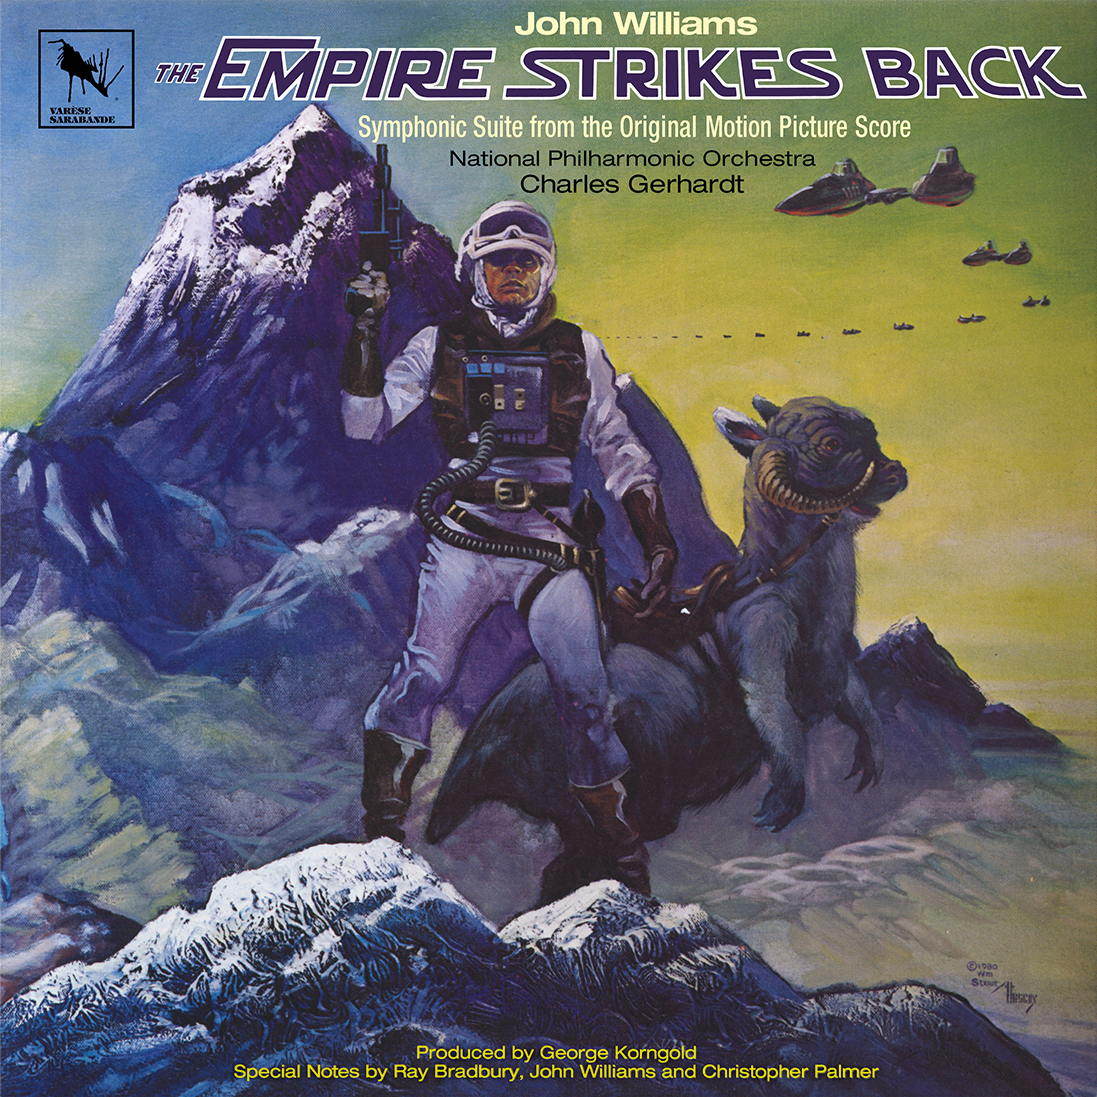 Саундтрек UME (USM) John Williams, Charles Gerhardt, National Philharmonic Orchestra - The Empire Strikes Back (Symphonic Suite)